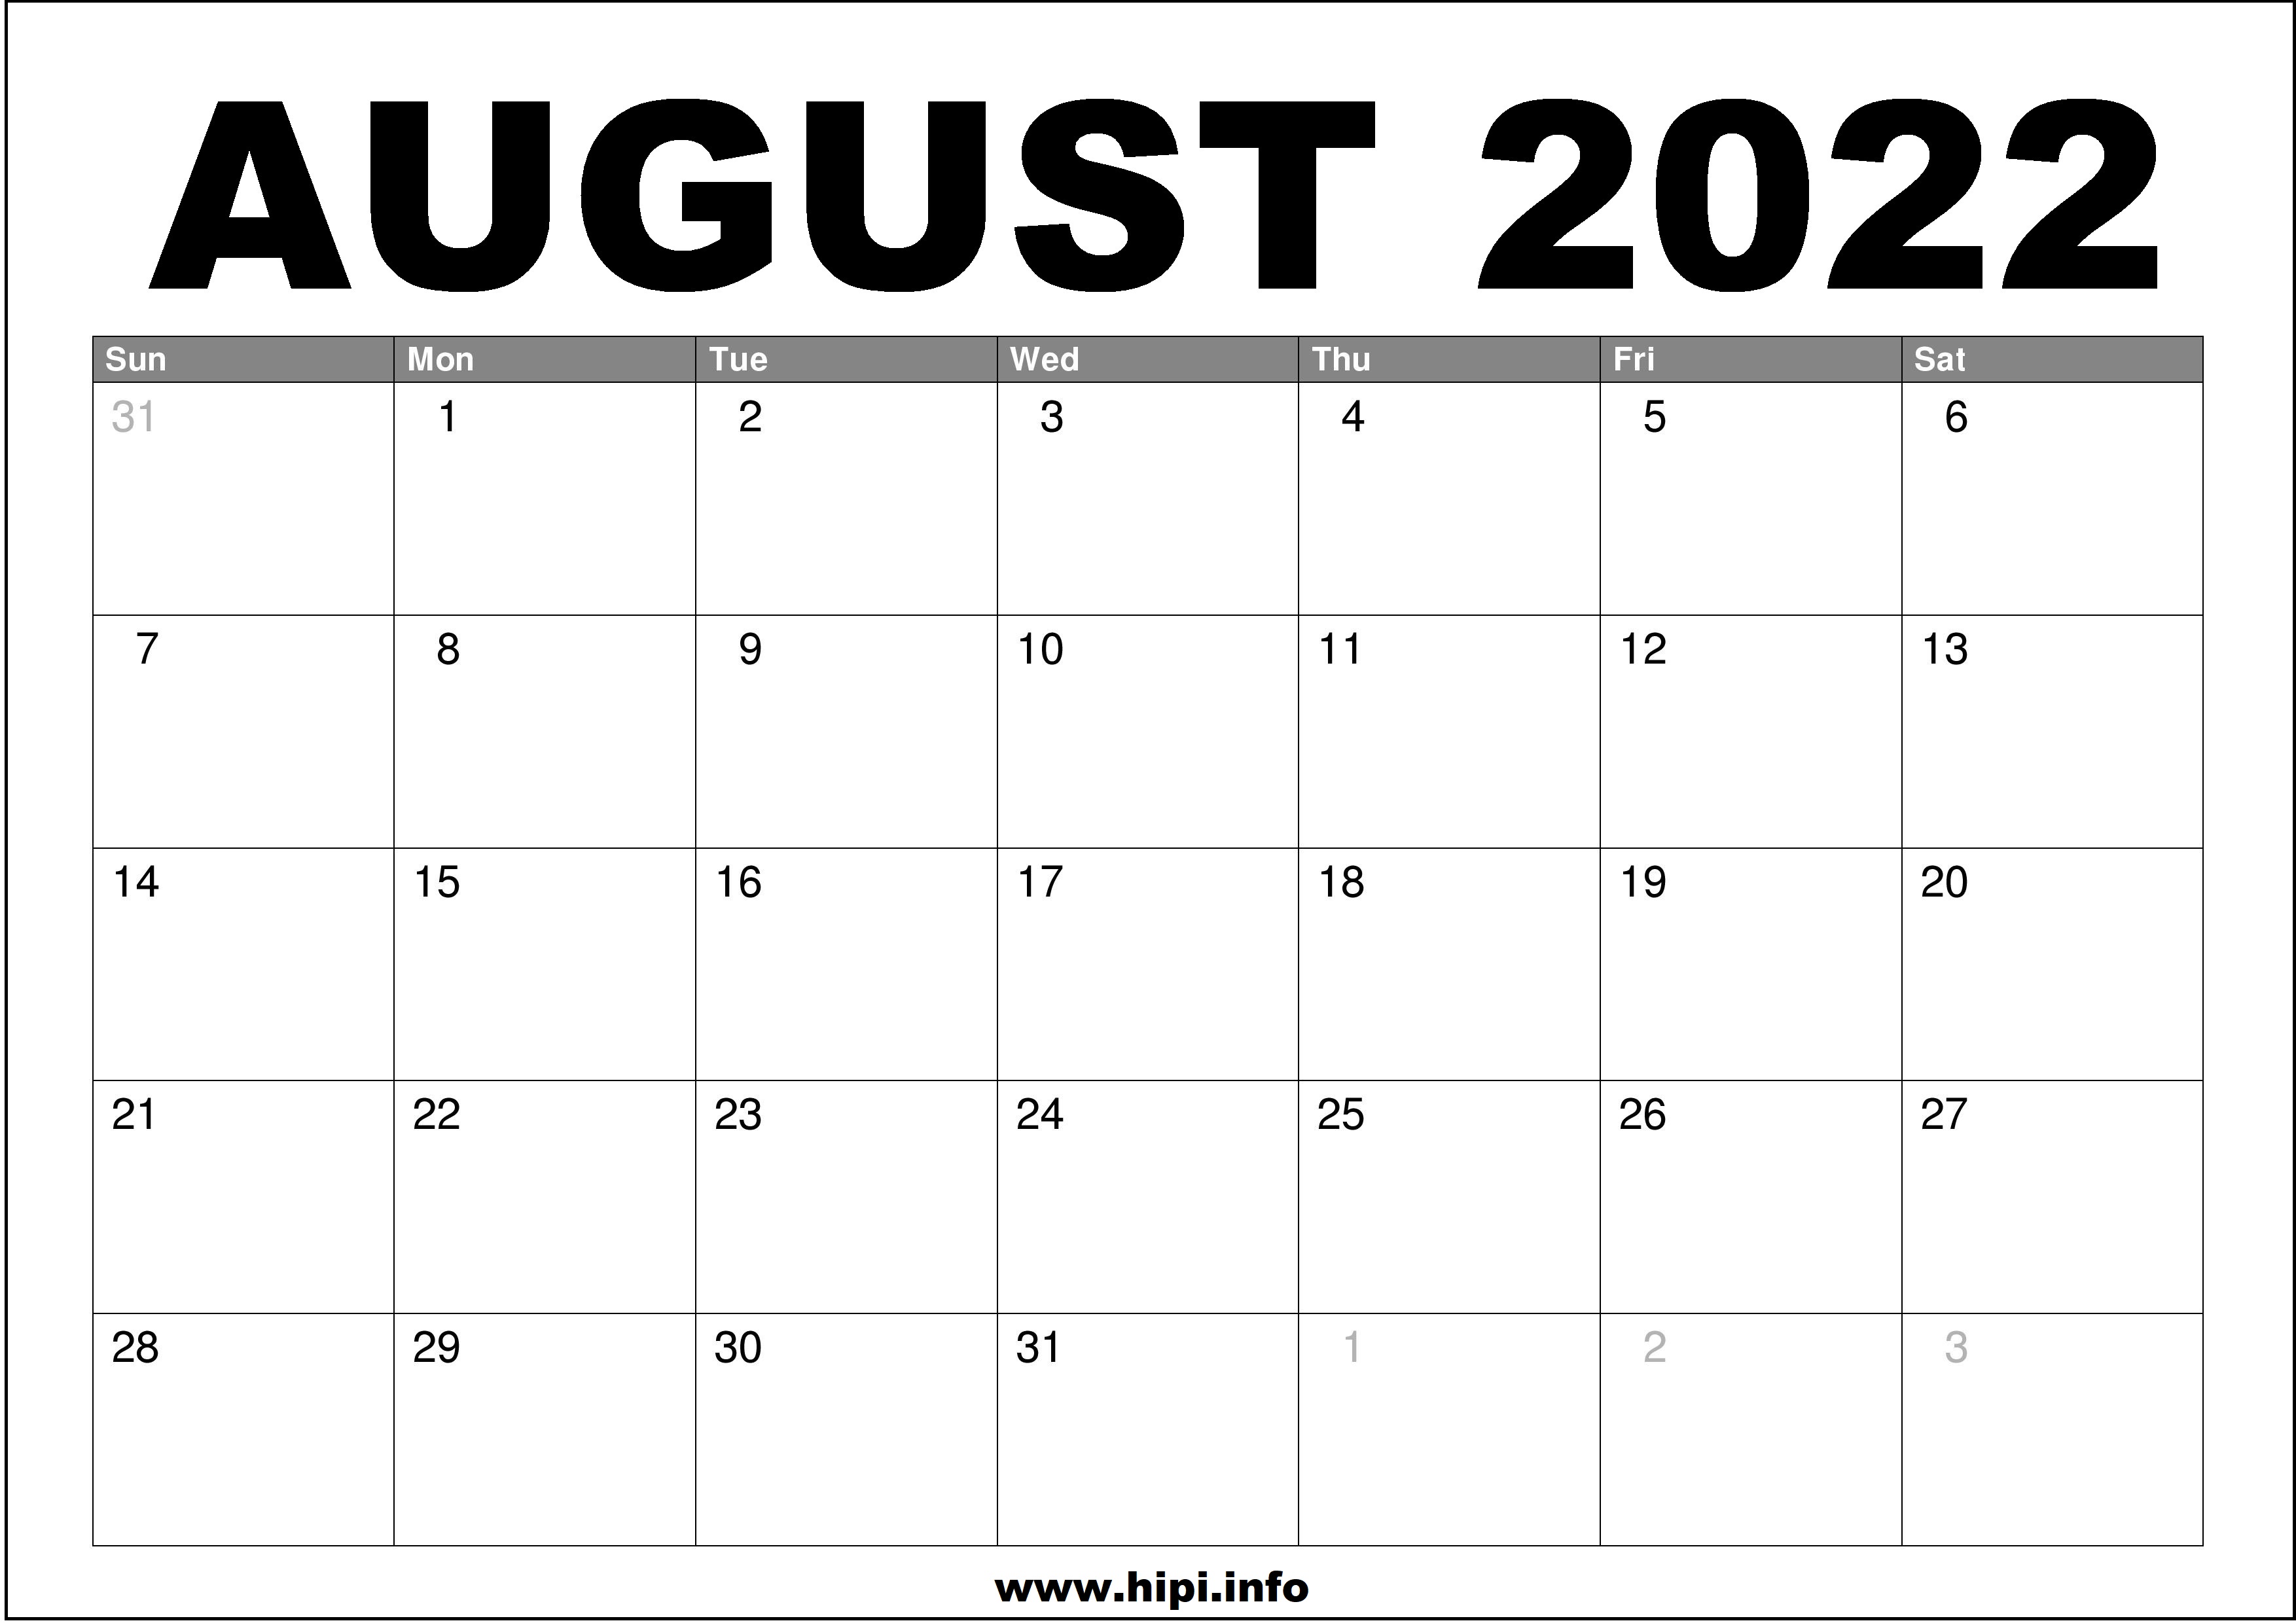 August 2022 Calendar Printable Free - Hipi.info | Calendars Printable Free